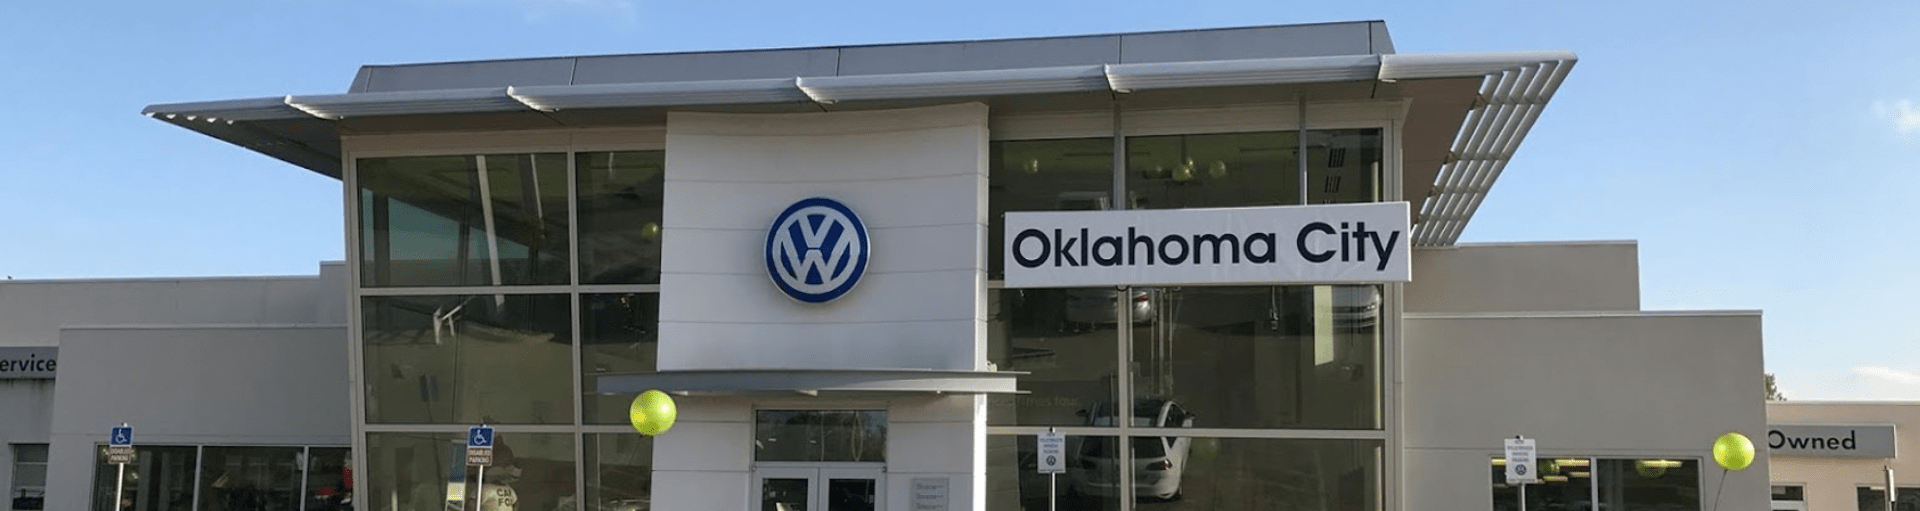 Oklahoma City Volkswagen Transmission Fluid Exchange Service